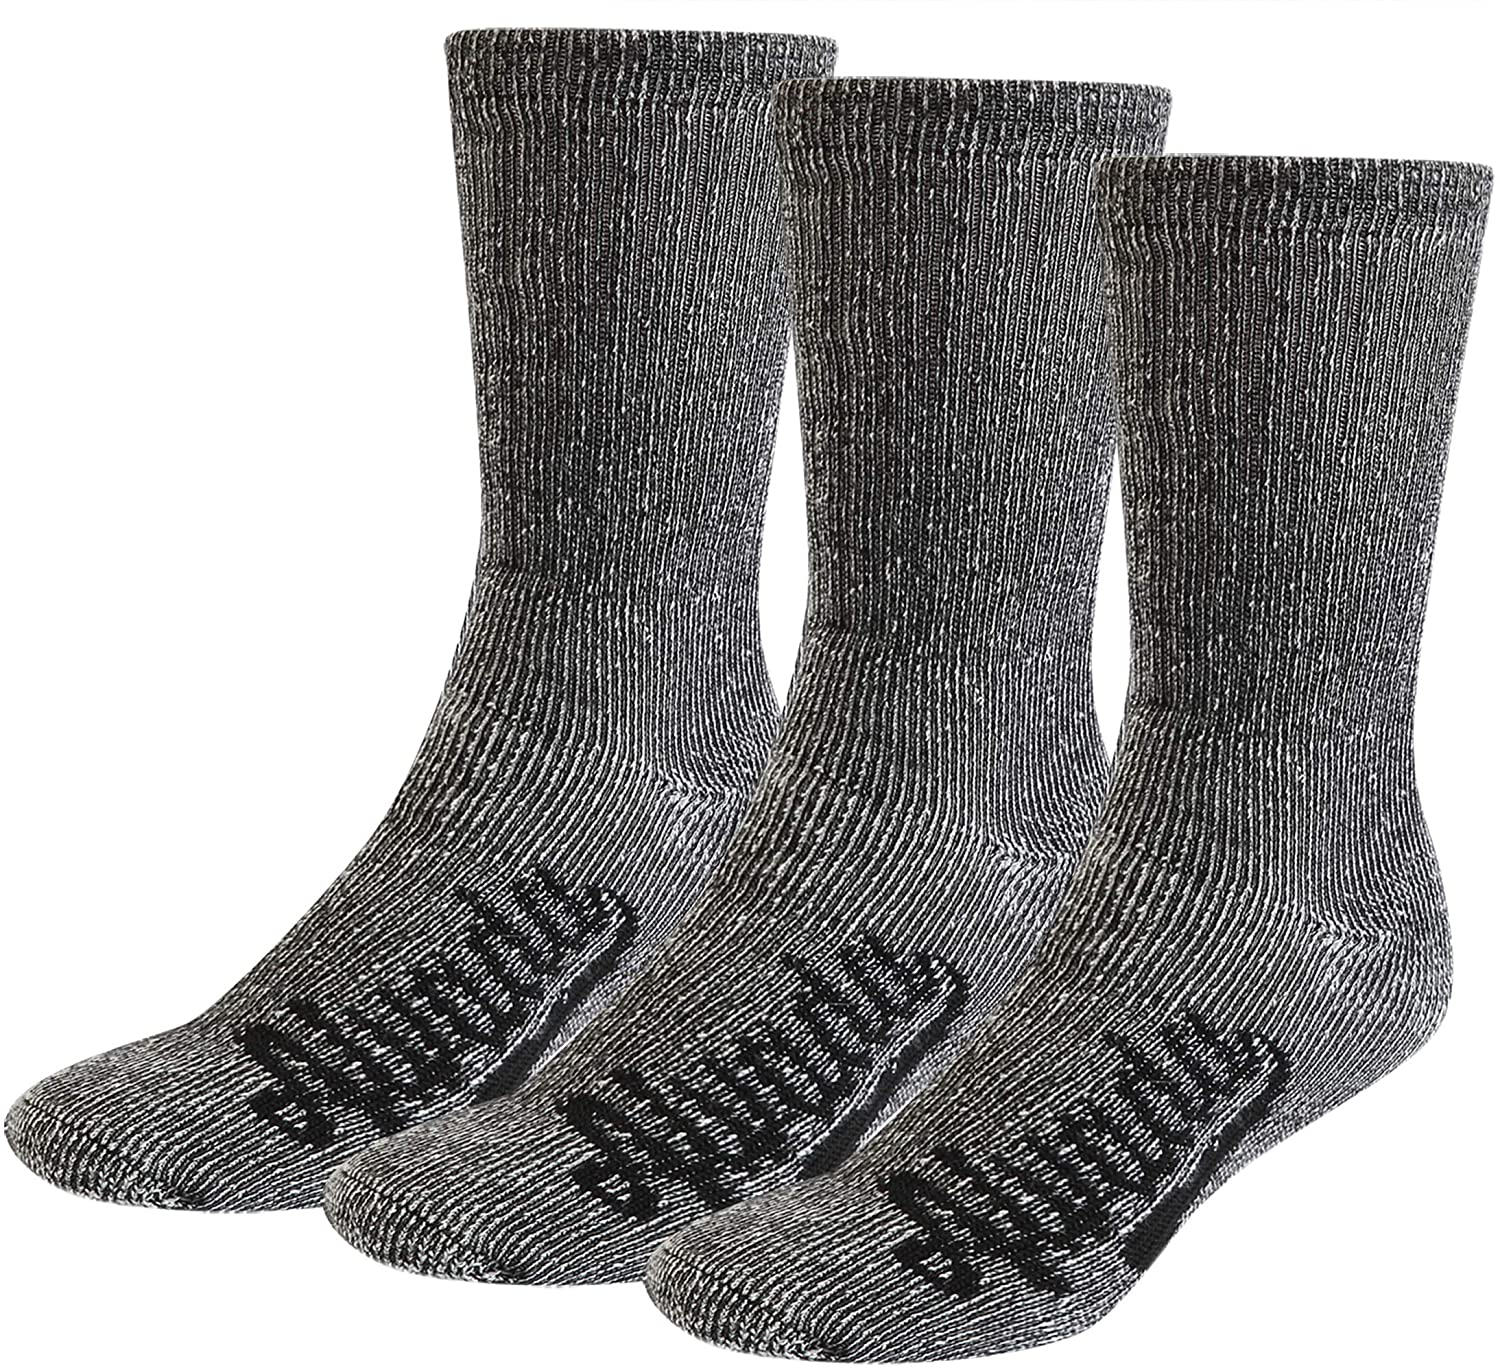 Alvada 80% Merino Wool Hiking Socks Thermal Warm Crew Winter Boot Sock for Men & Women 3 Pairs